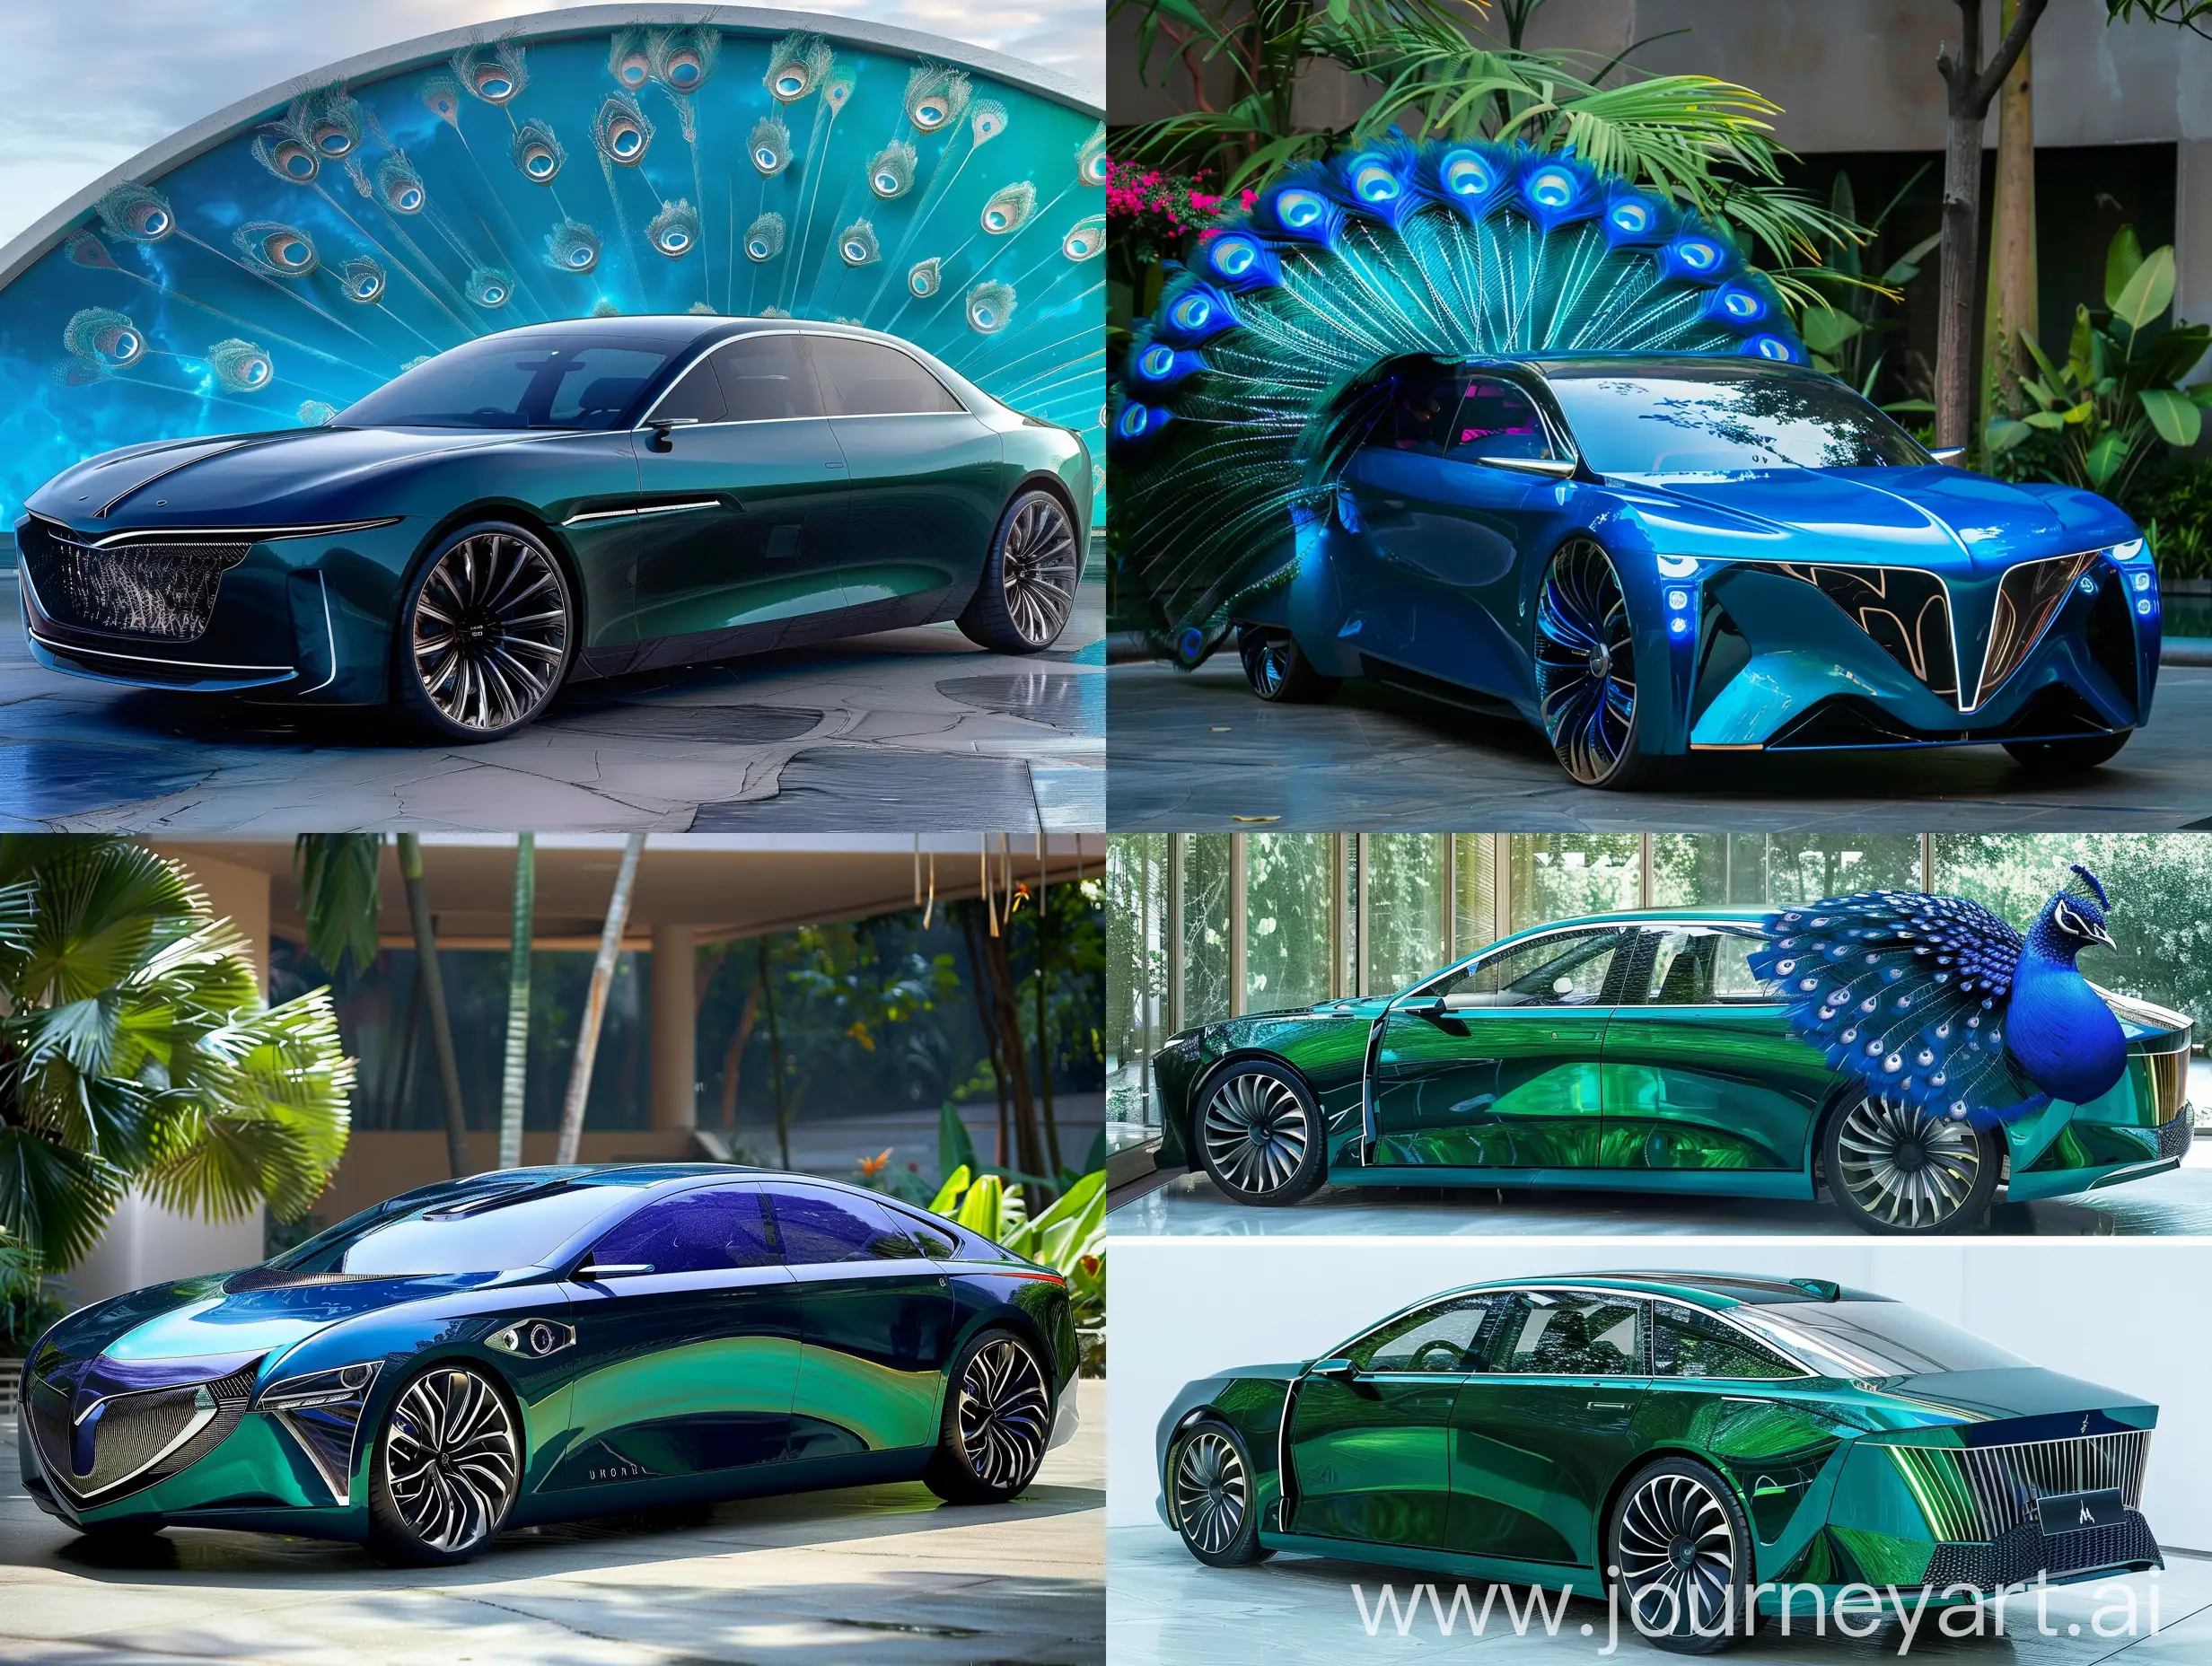 Futuristic-Hindustan-Motors-Ambassador-Sedan-Redesigned-for-2050-PeacockInspired